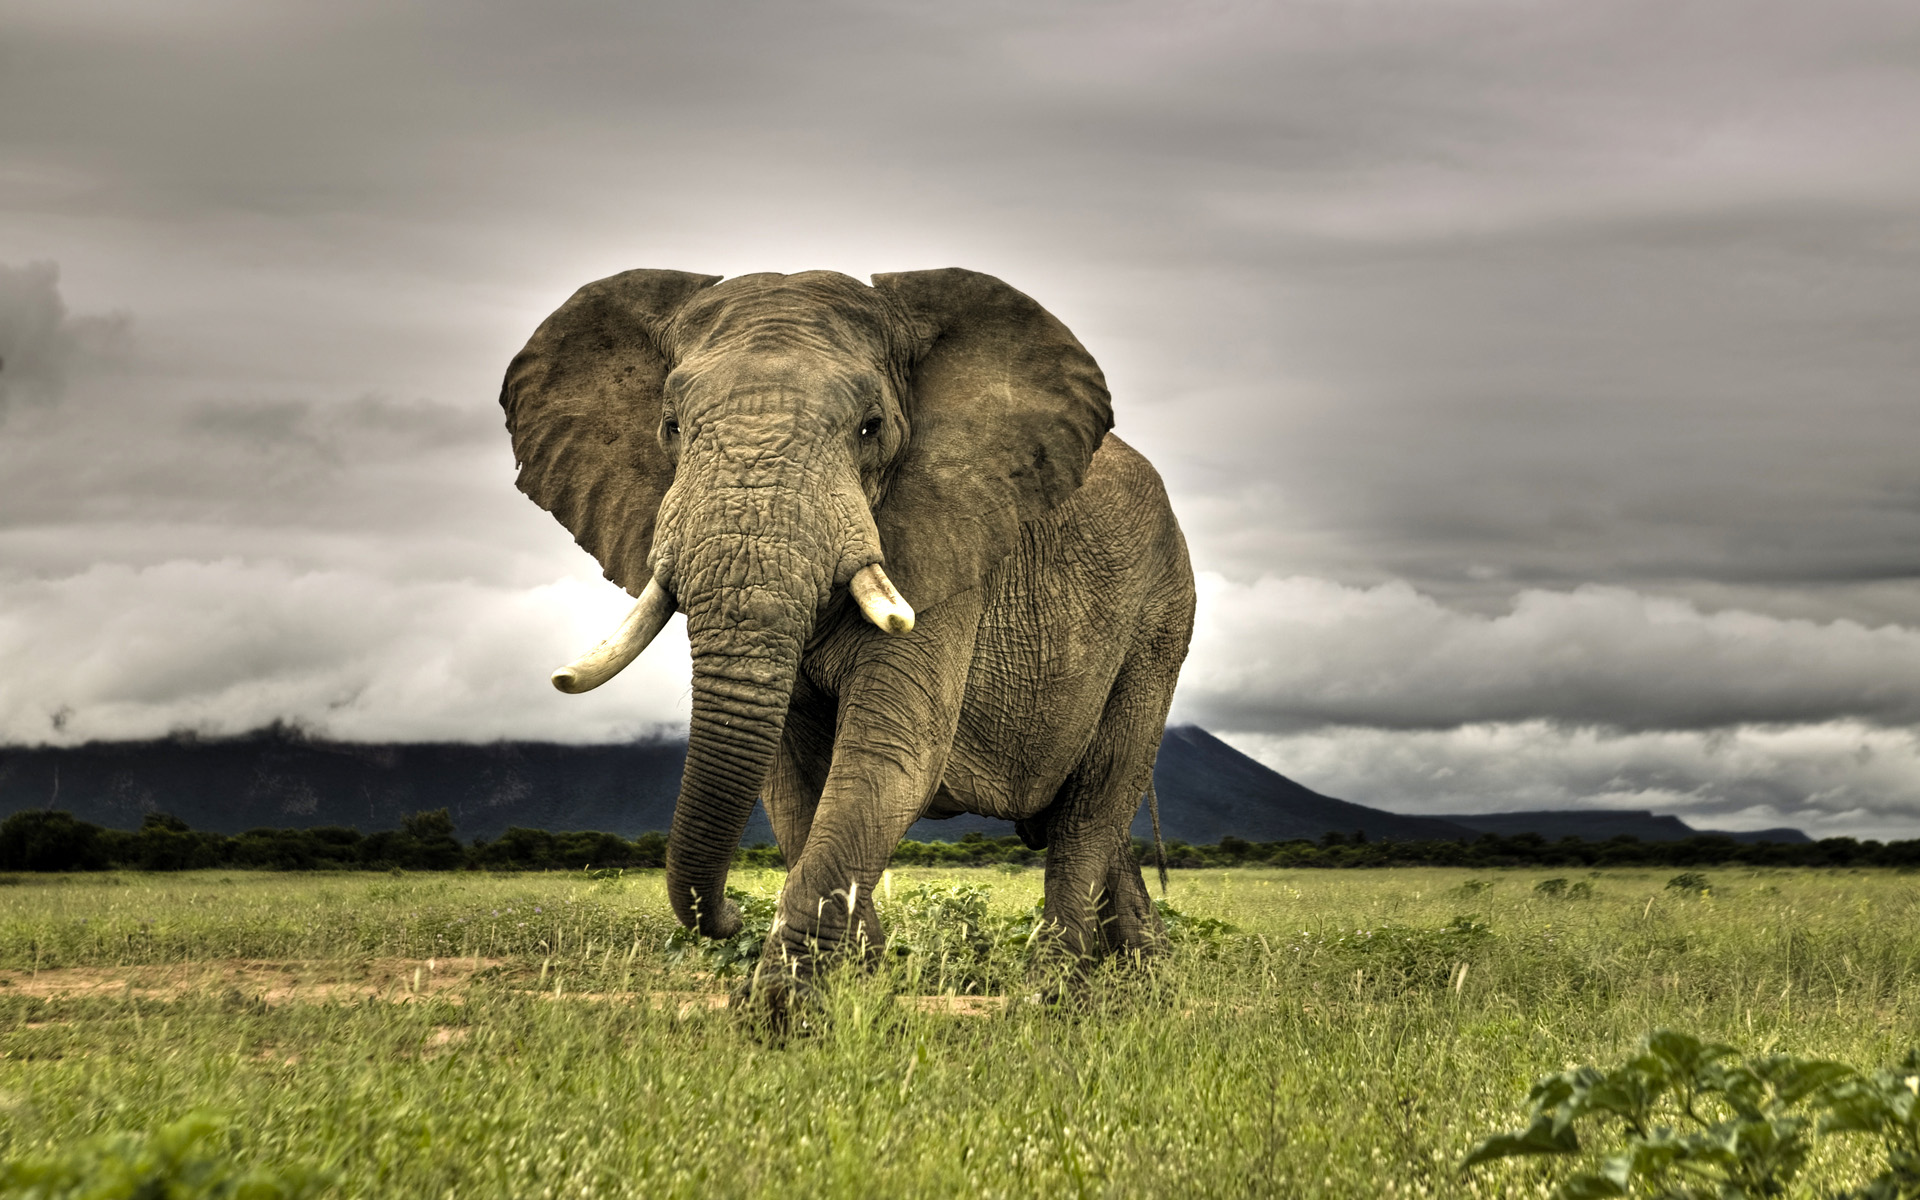 African Elephant Walking on Savanna